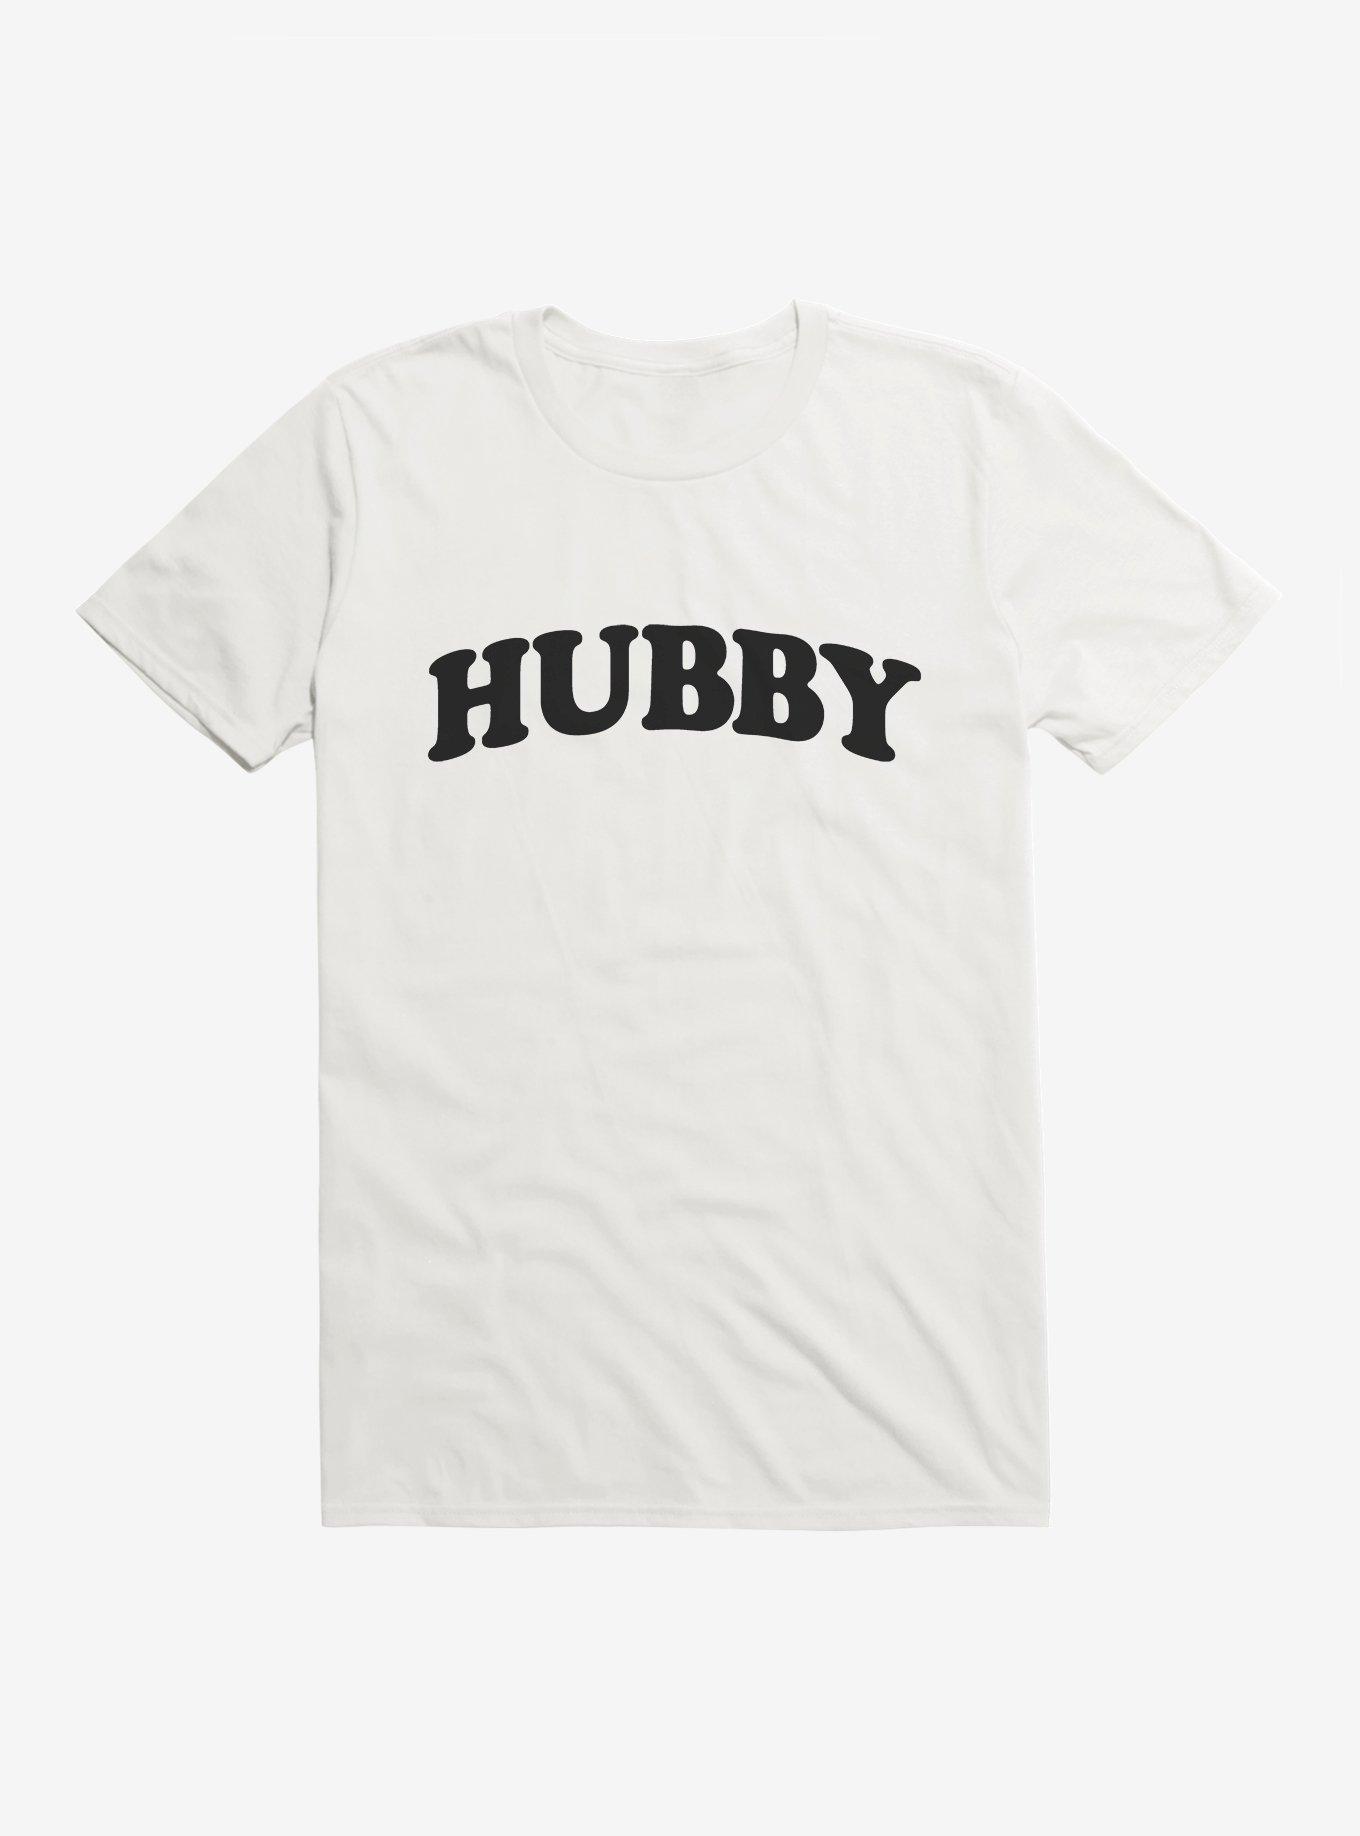 Hubby T-Shirt, WHITE, hi-res